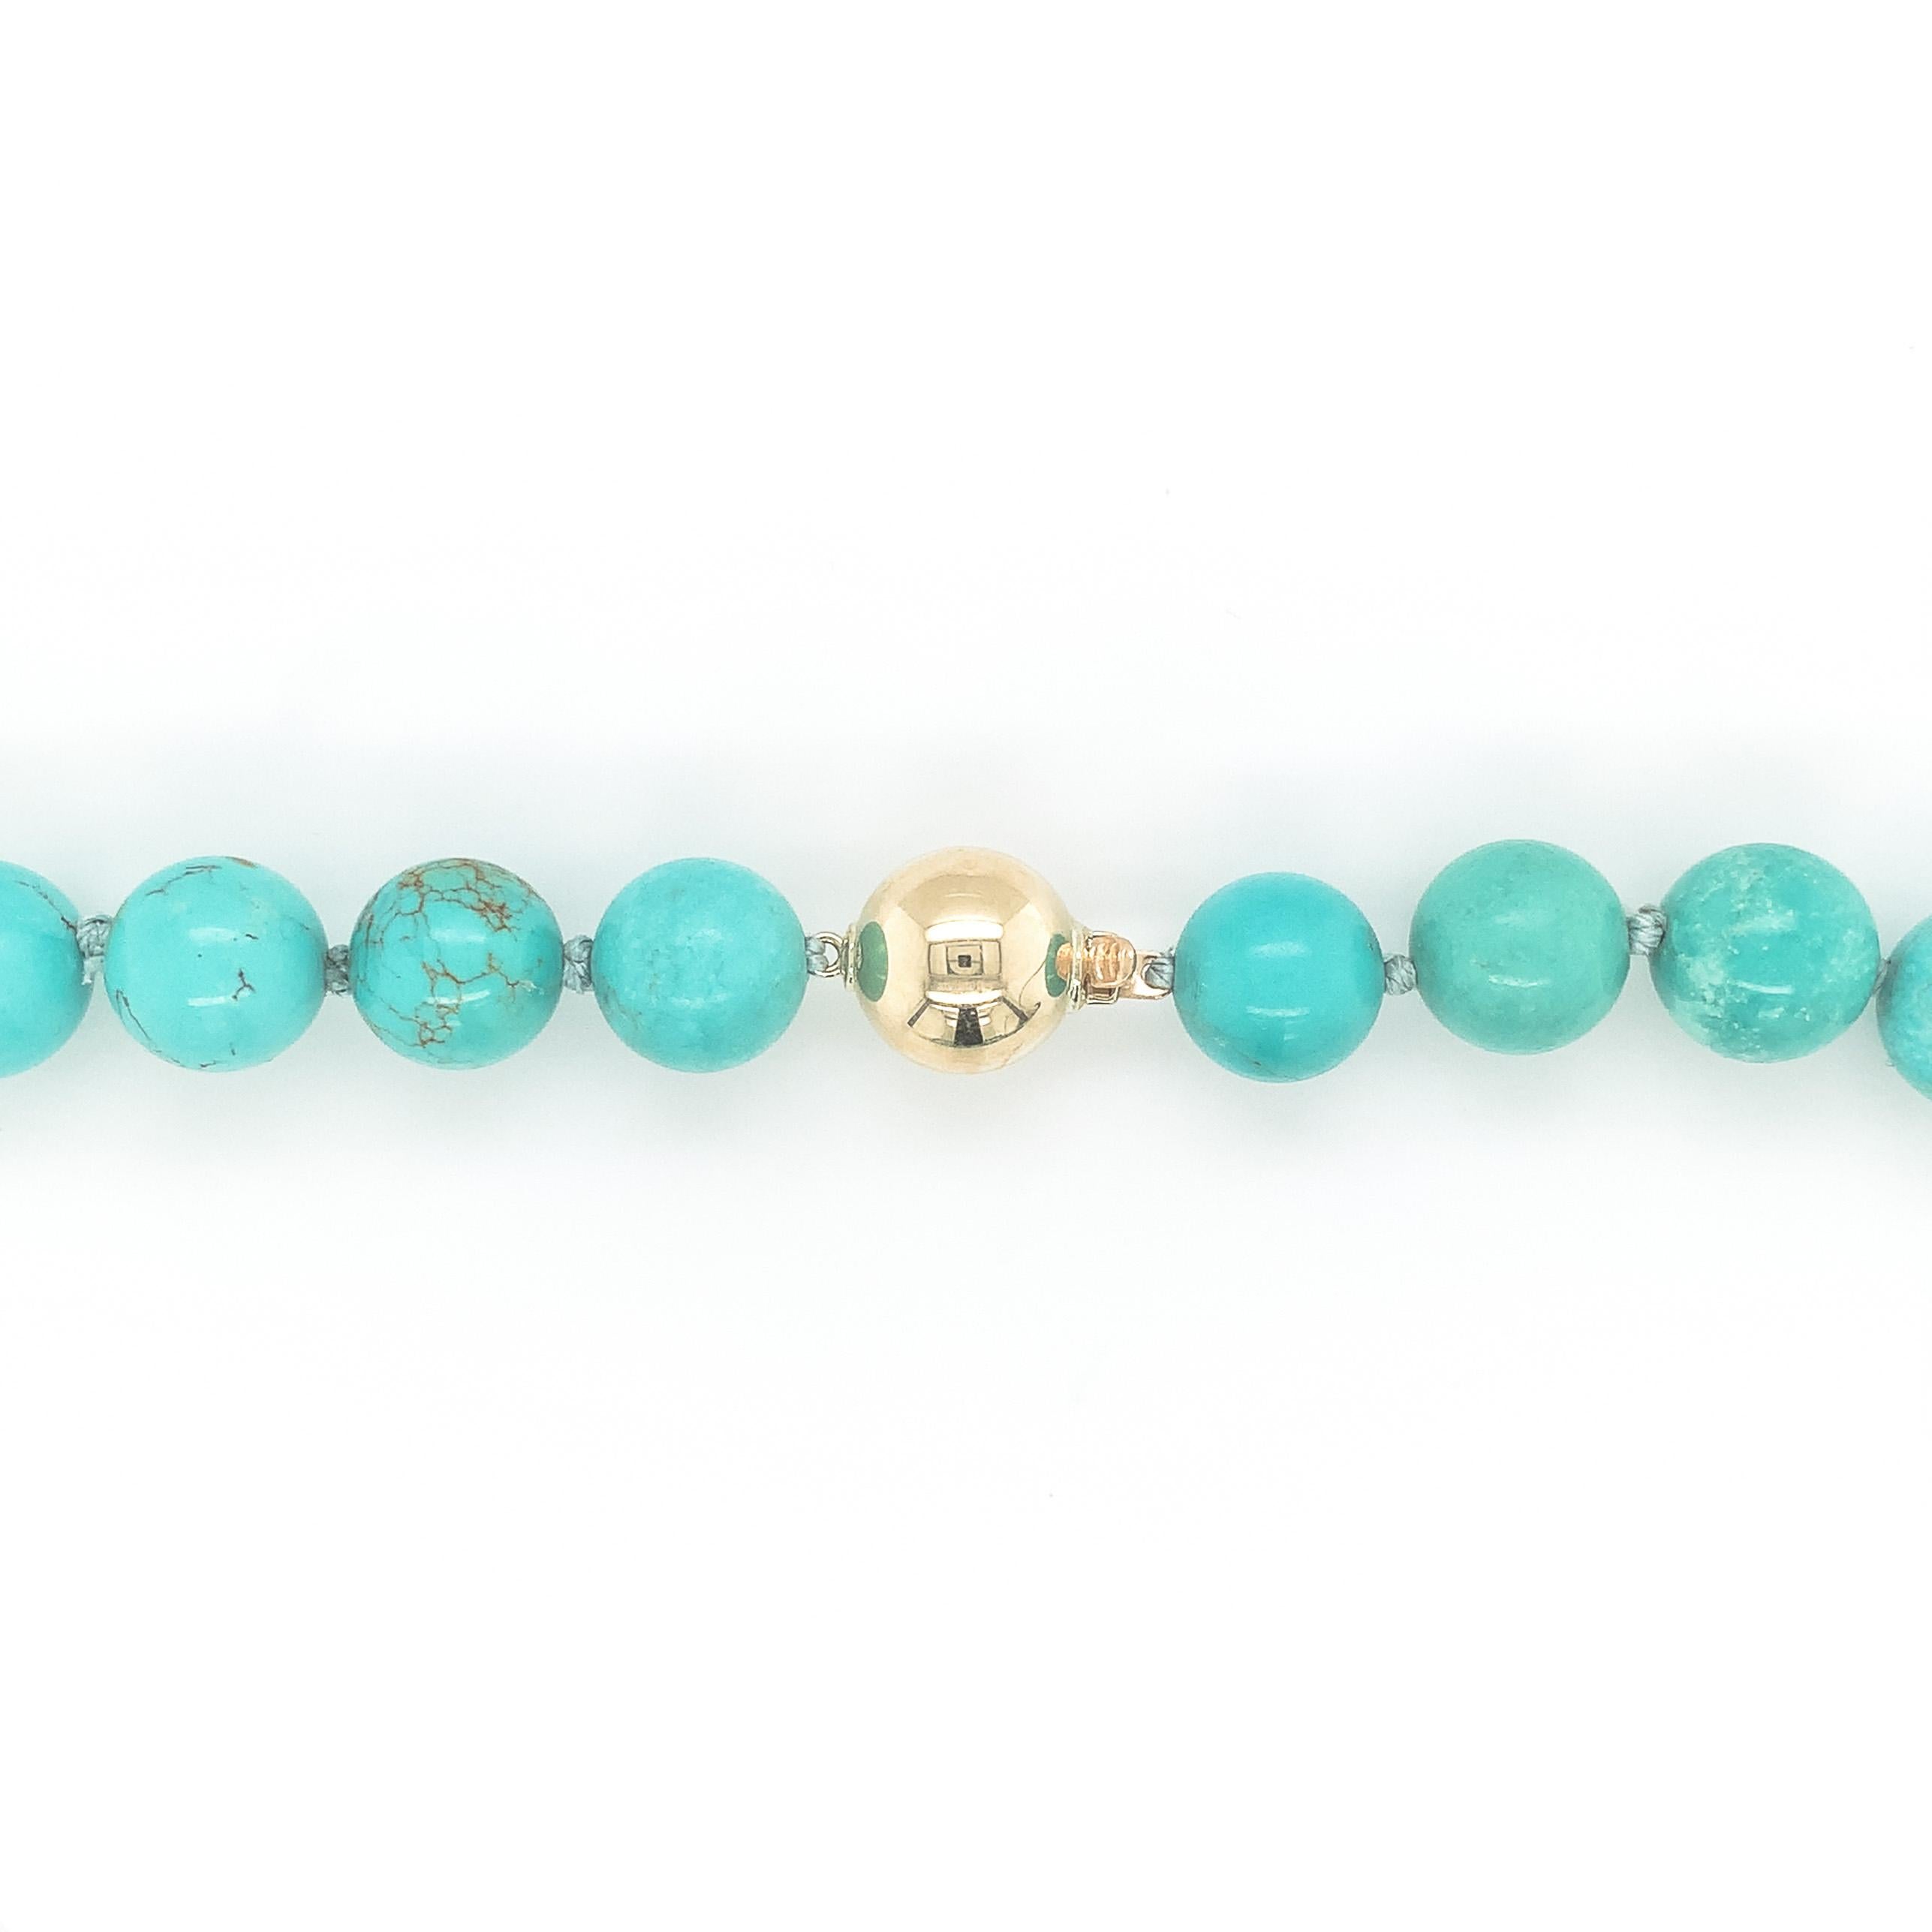 Strand of 12mm Kingman Turquoise Beads 27.5